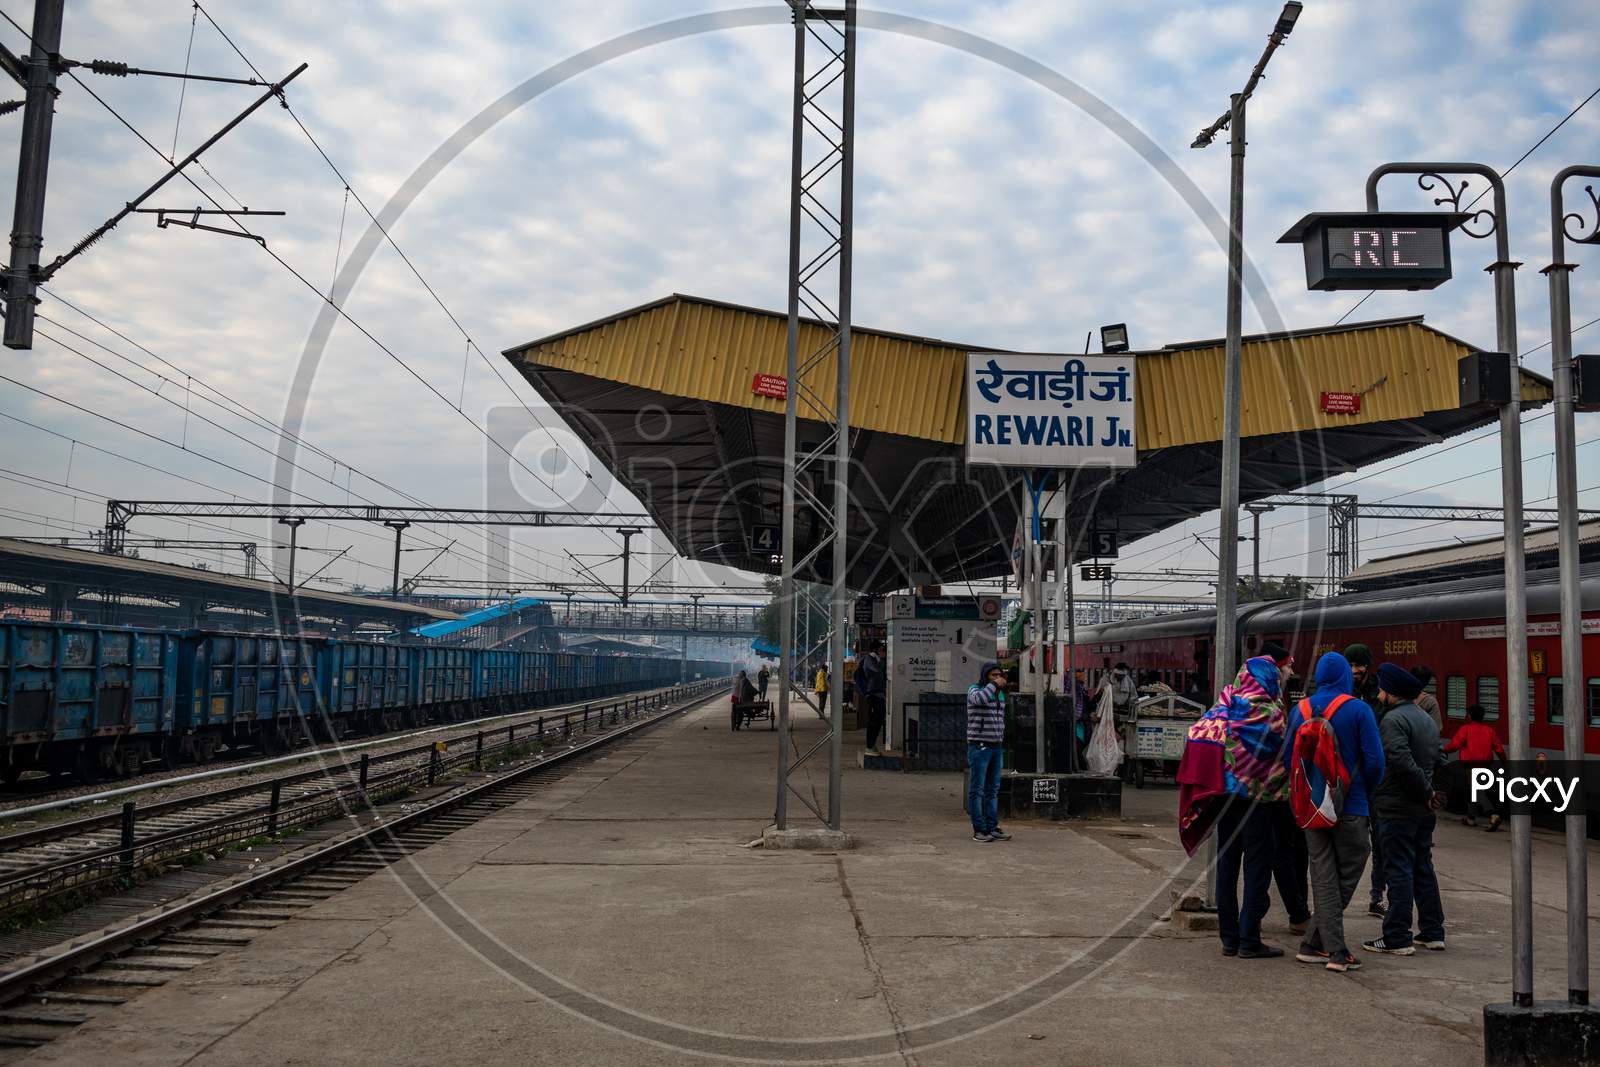 Rewari Jn. Railway Station With Passengers on Platforms